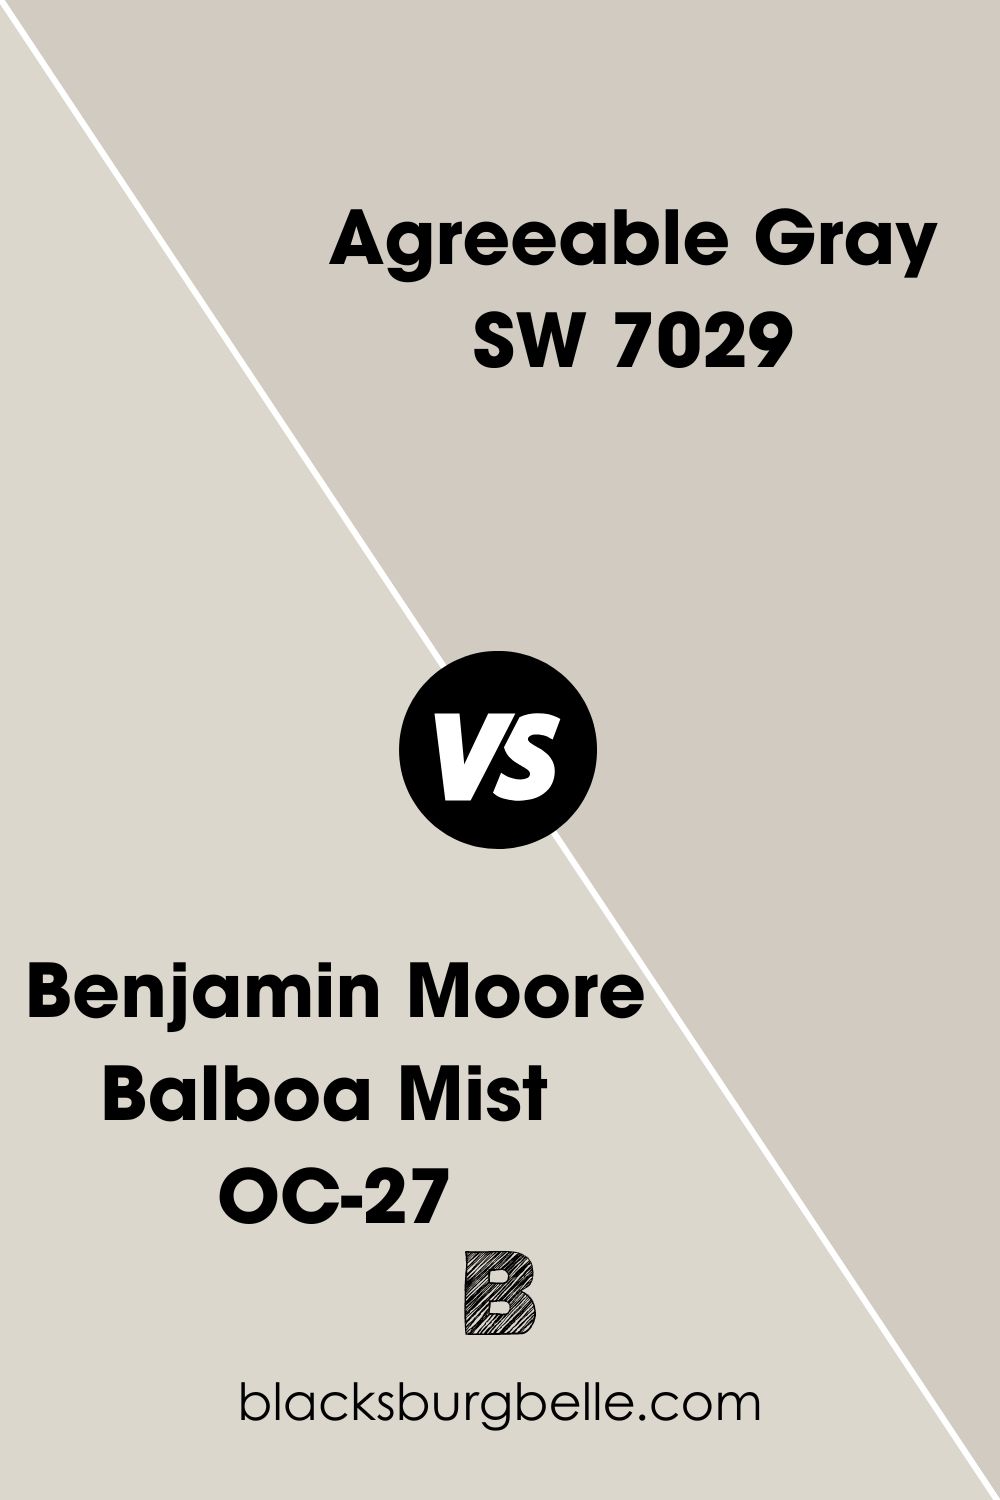 Benjamin Moore Balboa Mist OC-27